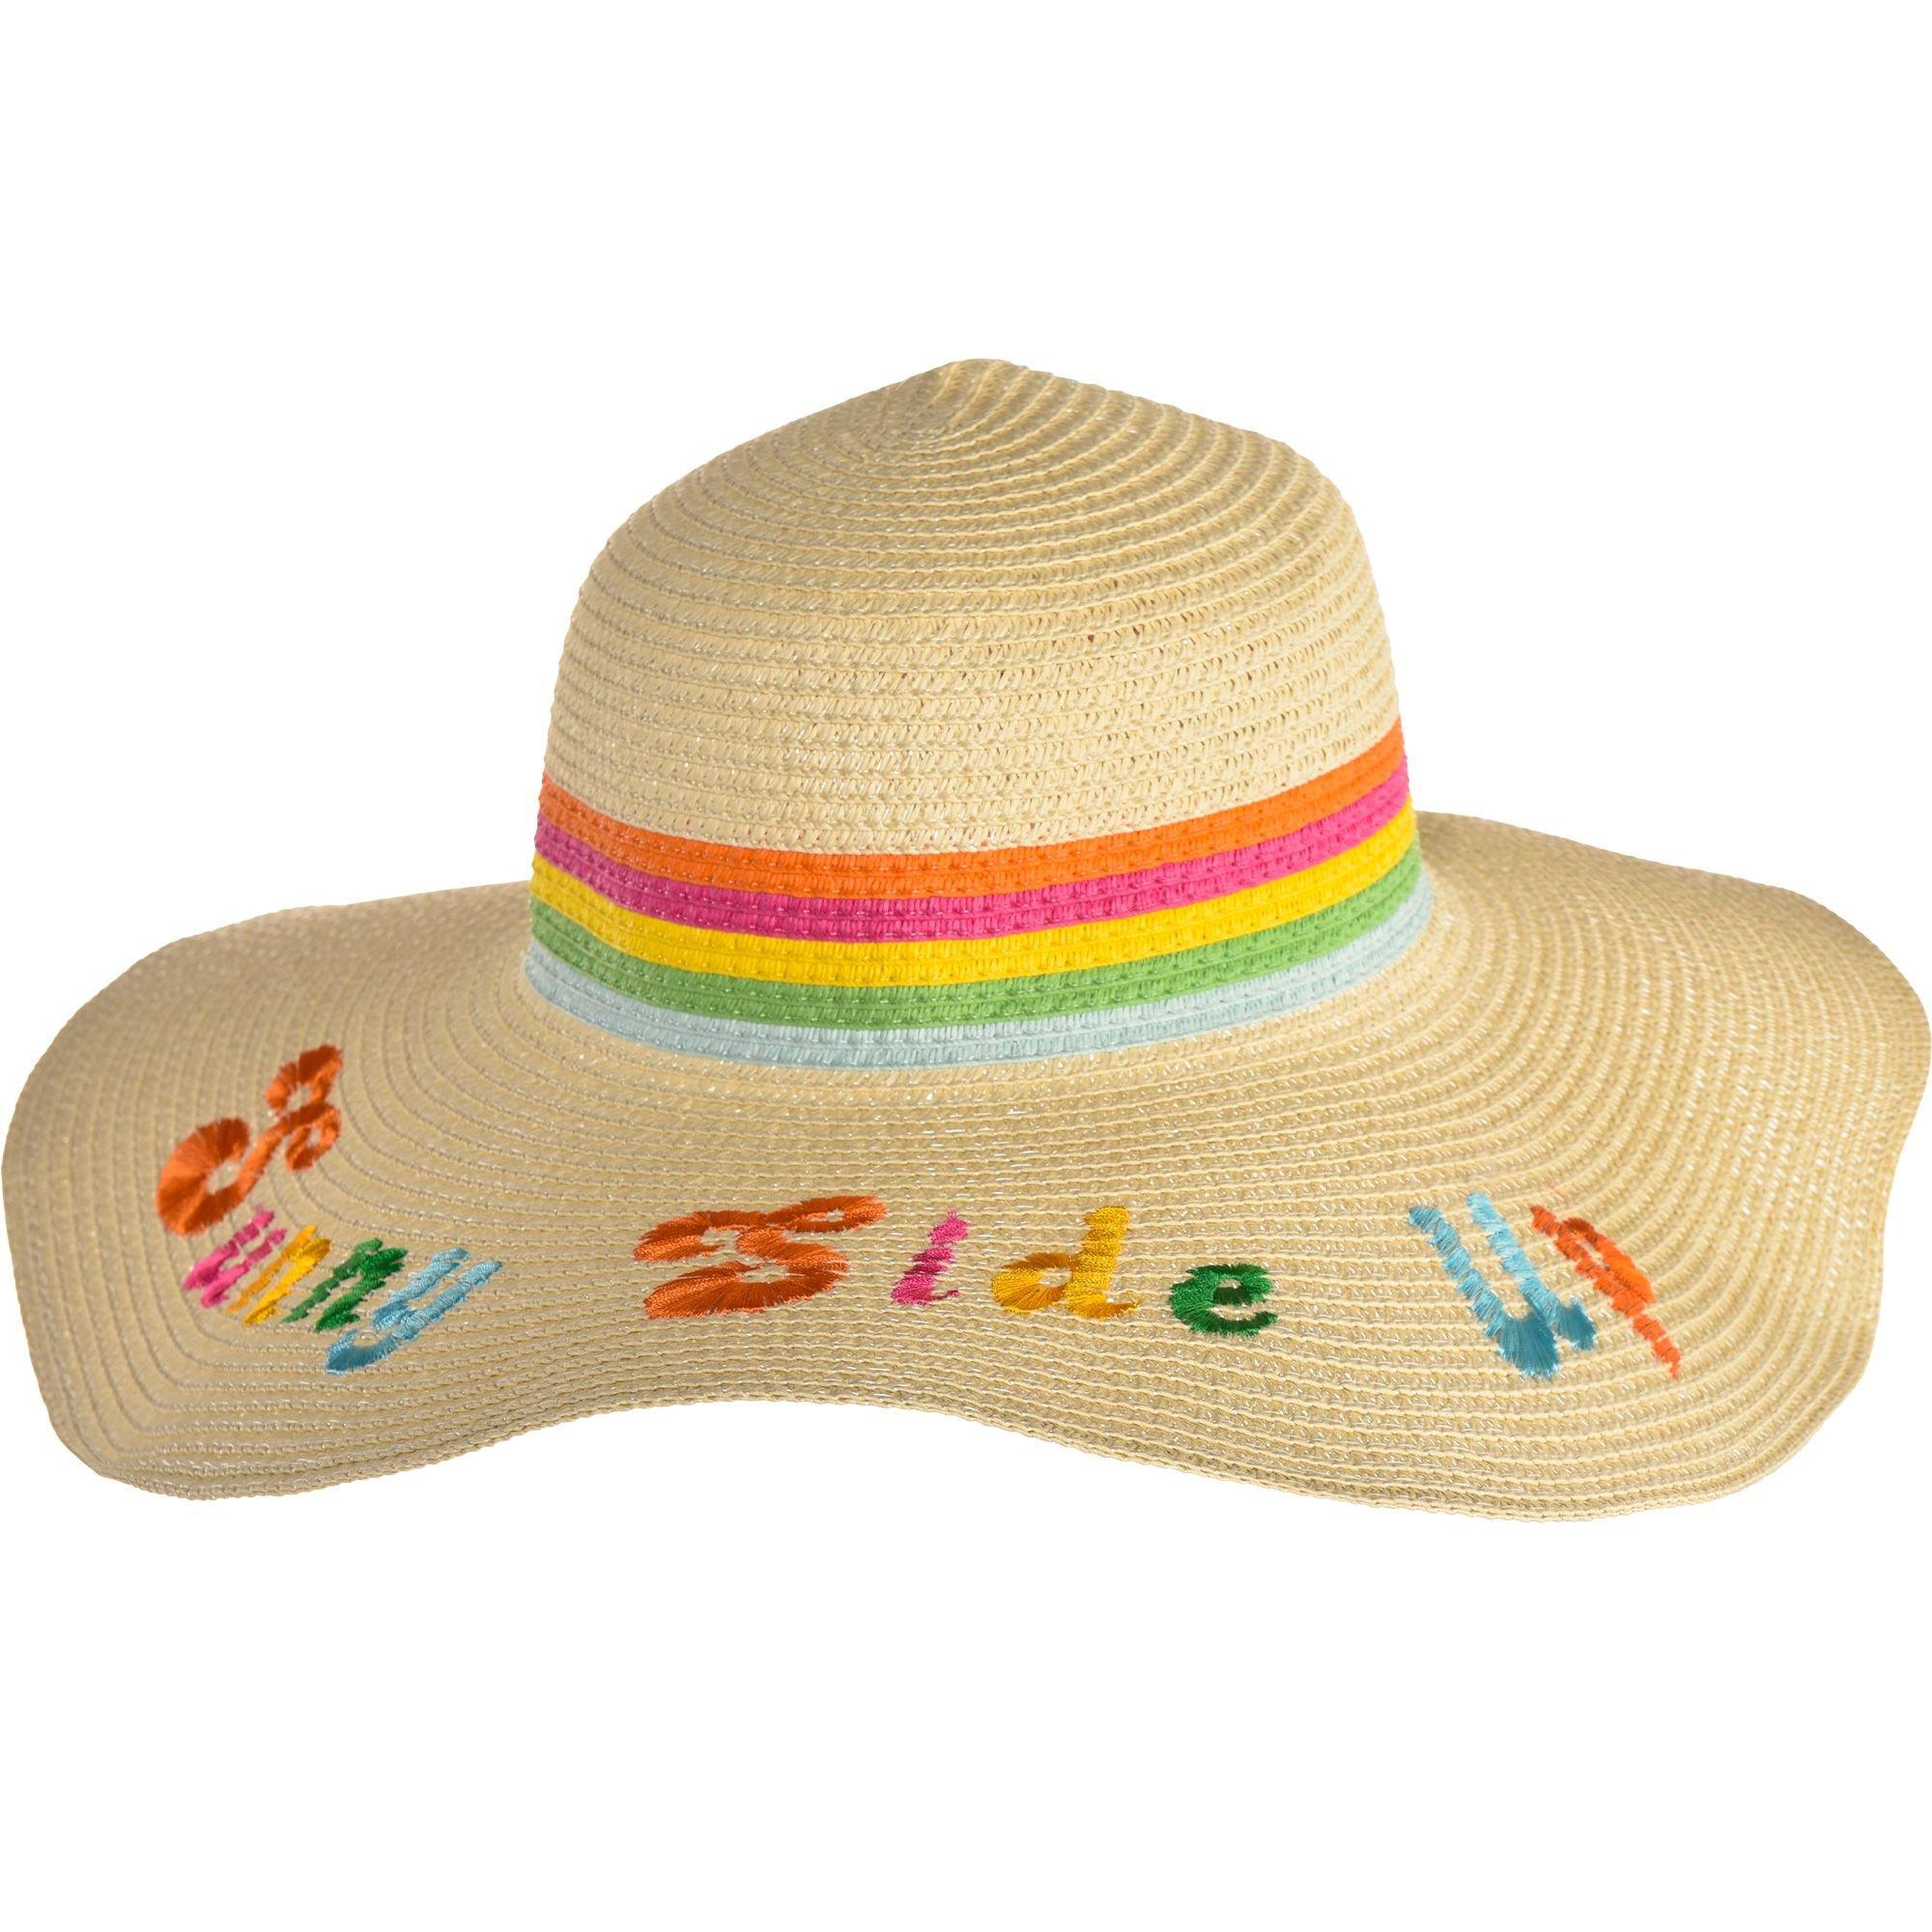 Personalized Straw Hat, Large Brim Straw Sun Hat, Bride Beach Hat